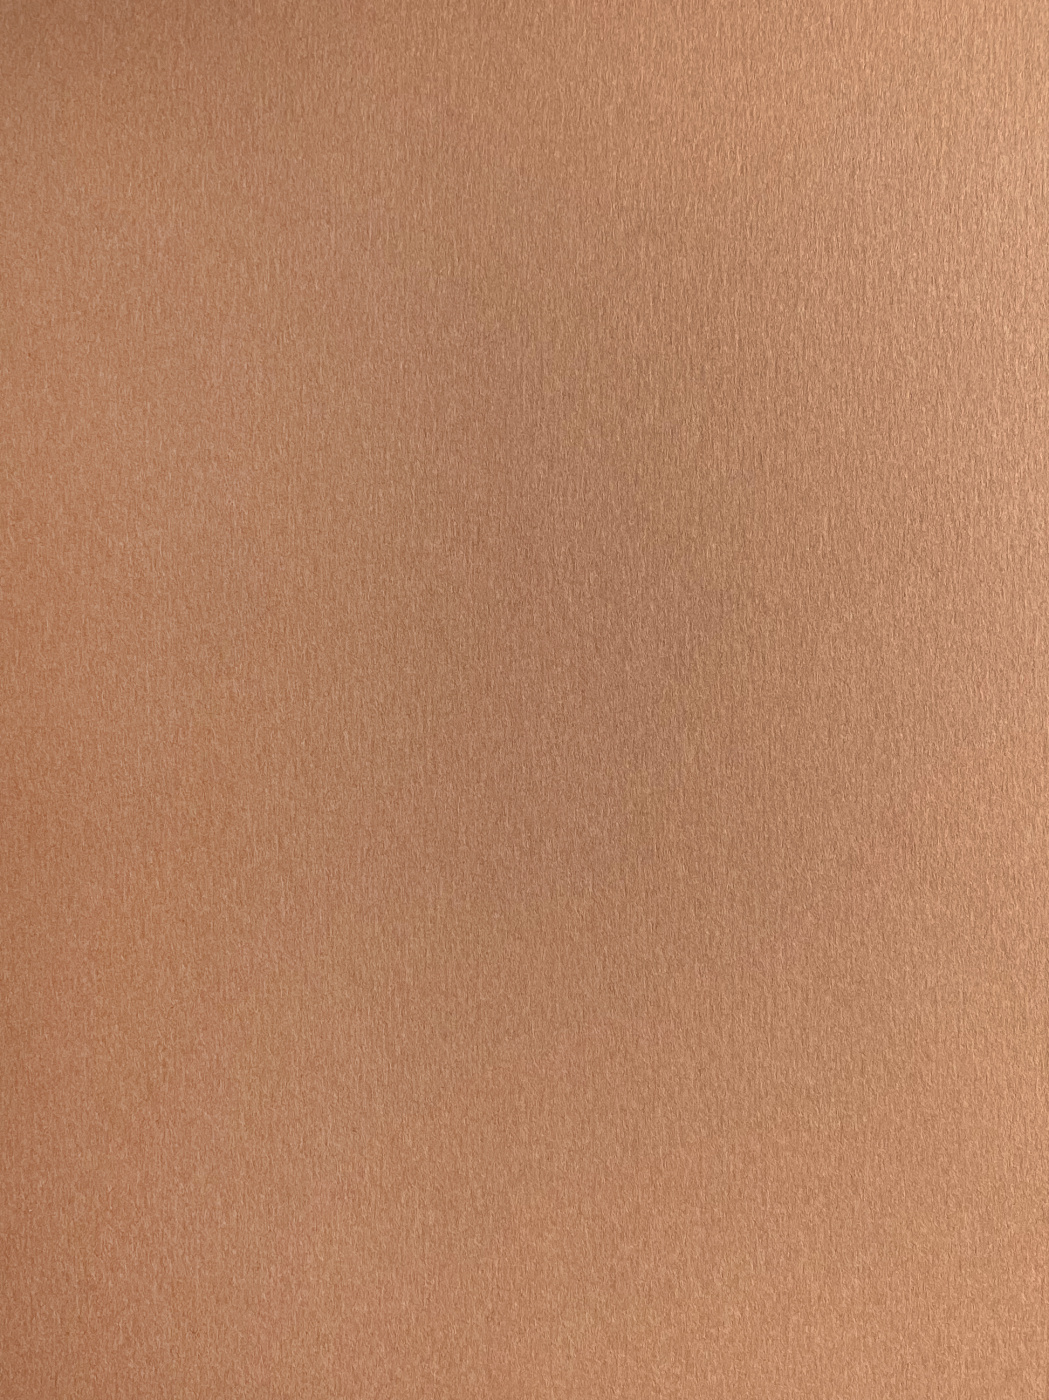 Бумага для пастели Малевичъ GrafArt А3 270 г, коричневая светлая бумага для скрапбукинга двусторонняя винтаж